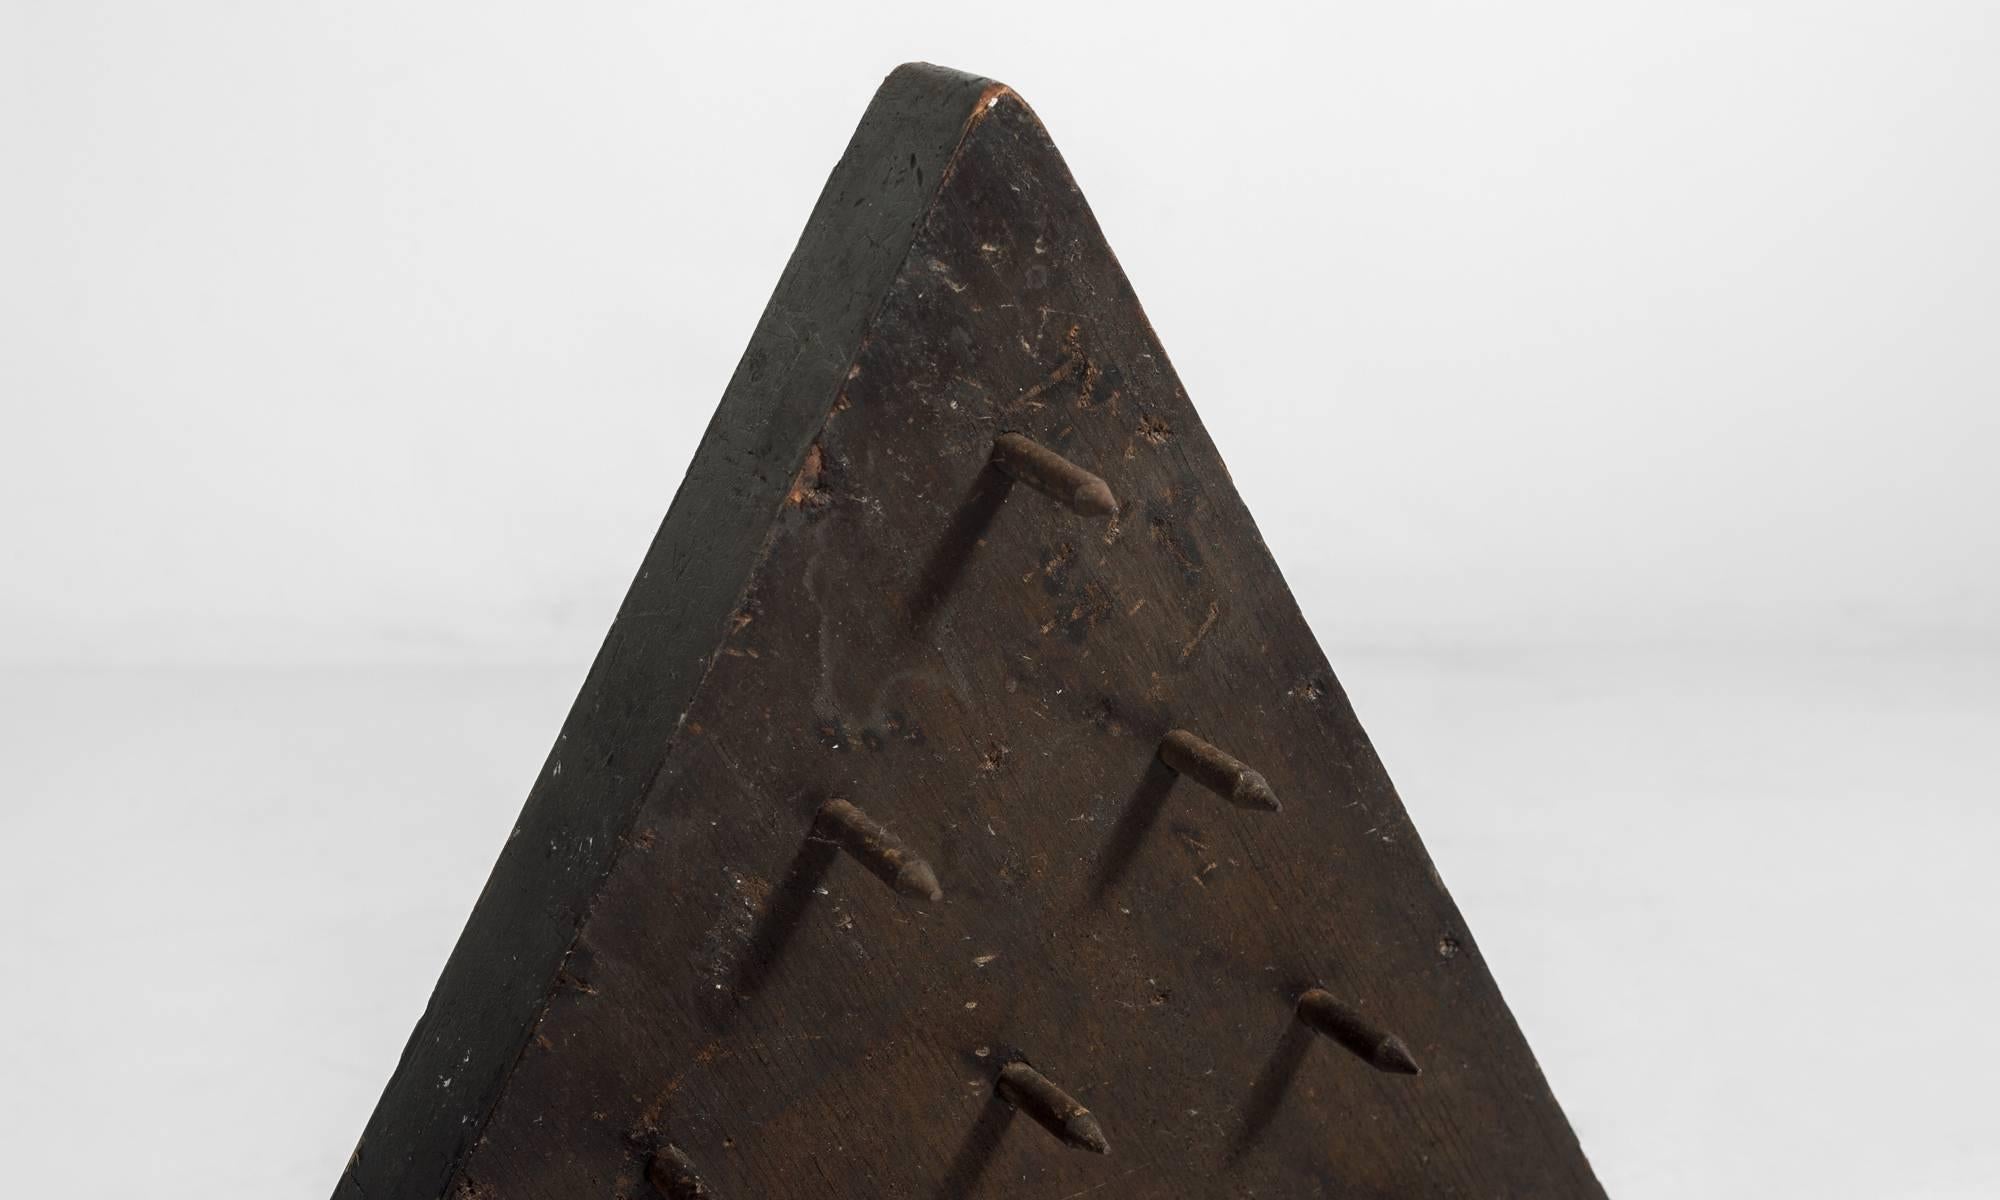 American Odd Fellows Triangular Wooden Piece with Spikes, circa 1900